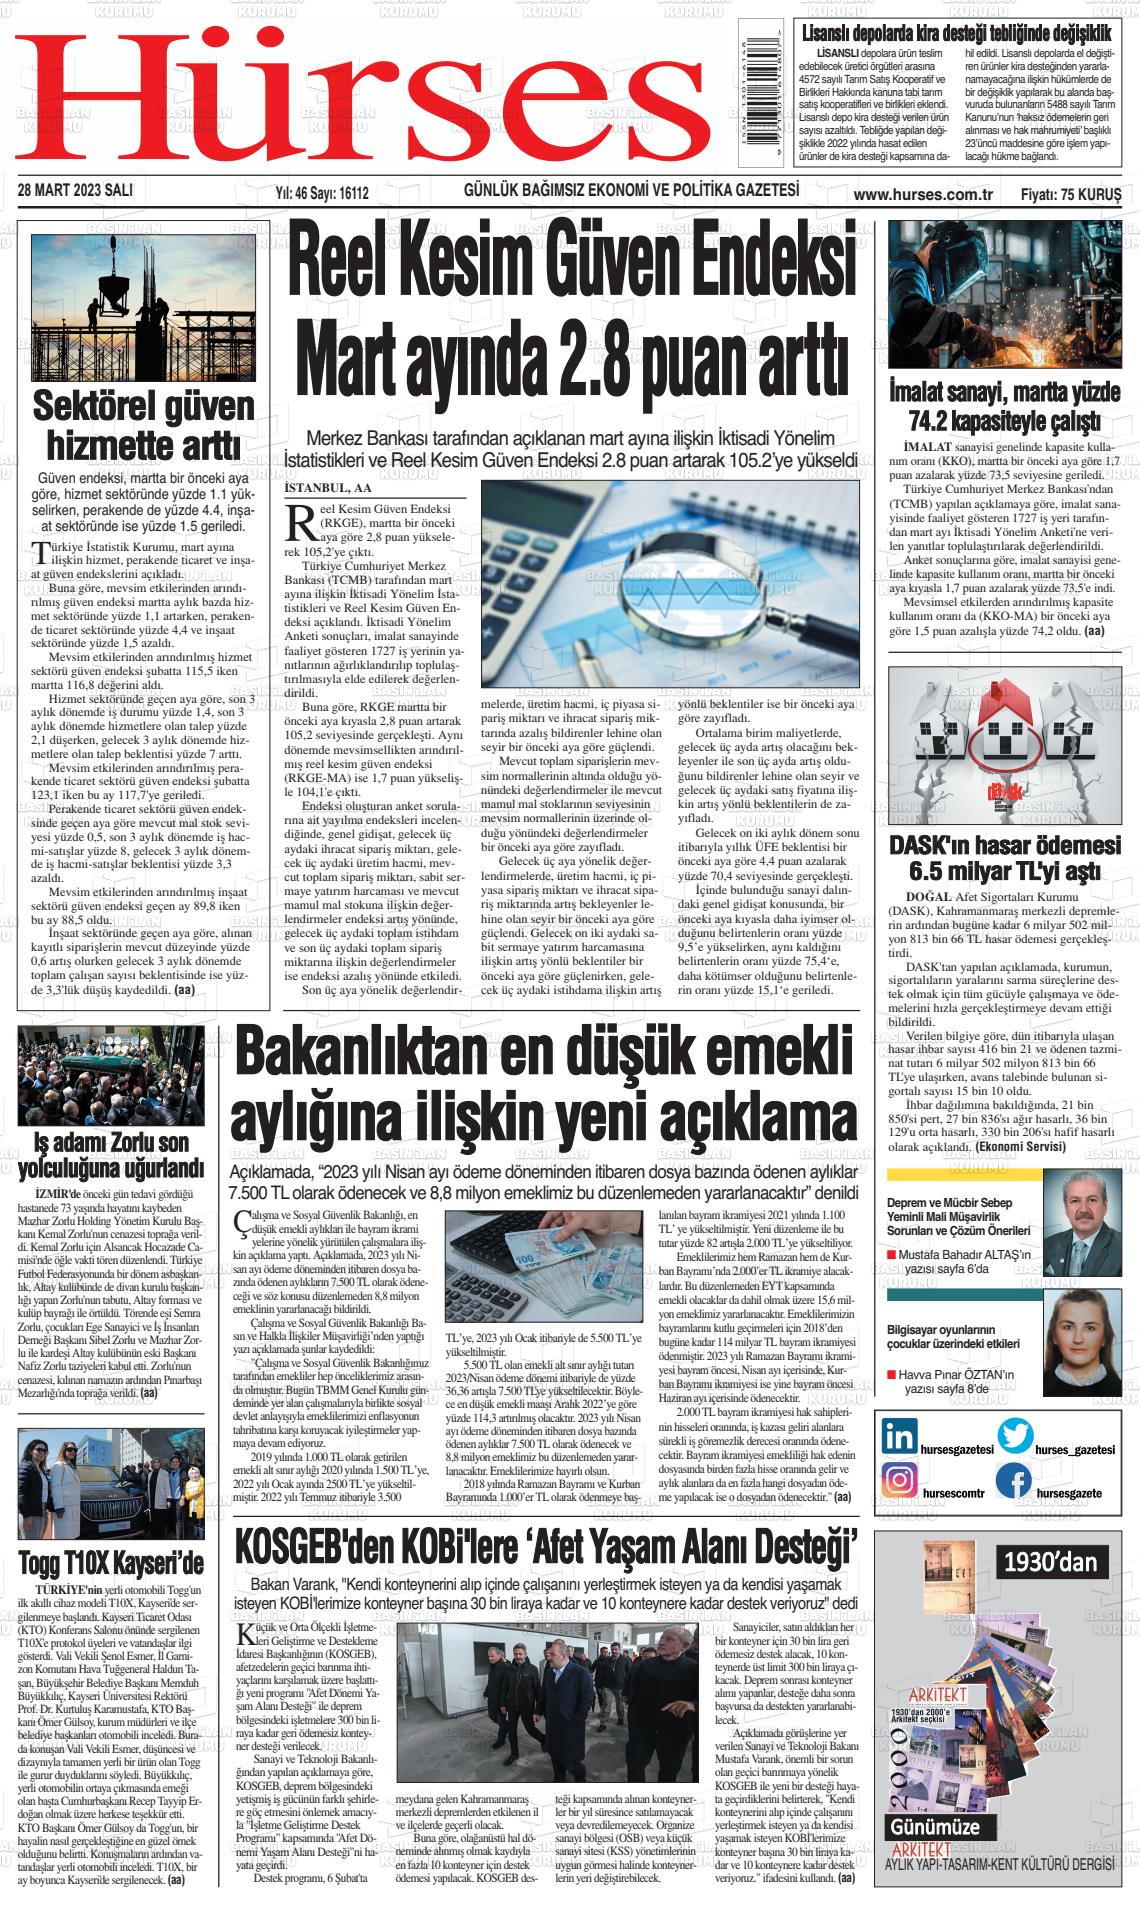 28 Mart 2023 İstanbul Hürses gazetesi Gazete Manşeti